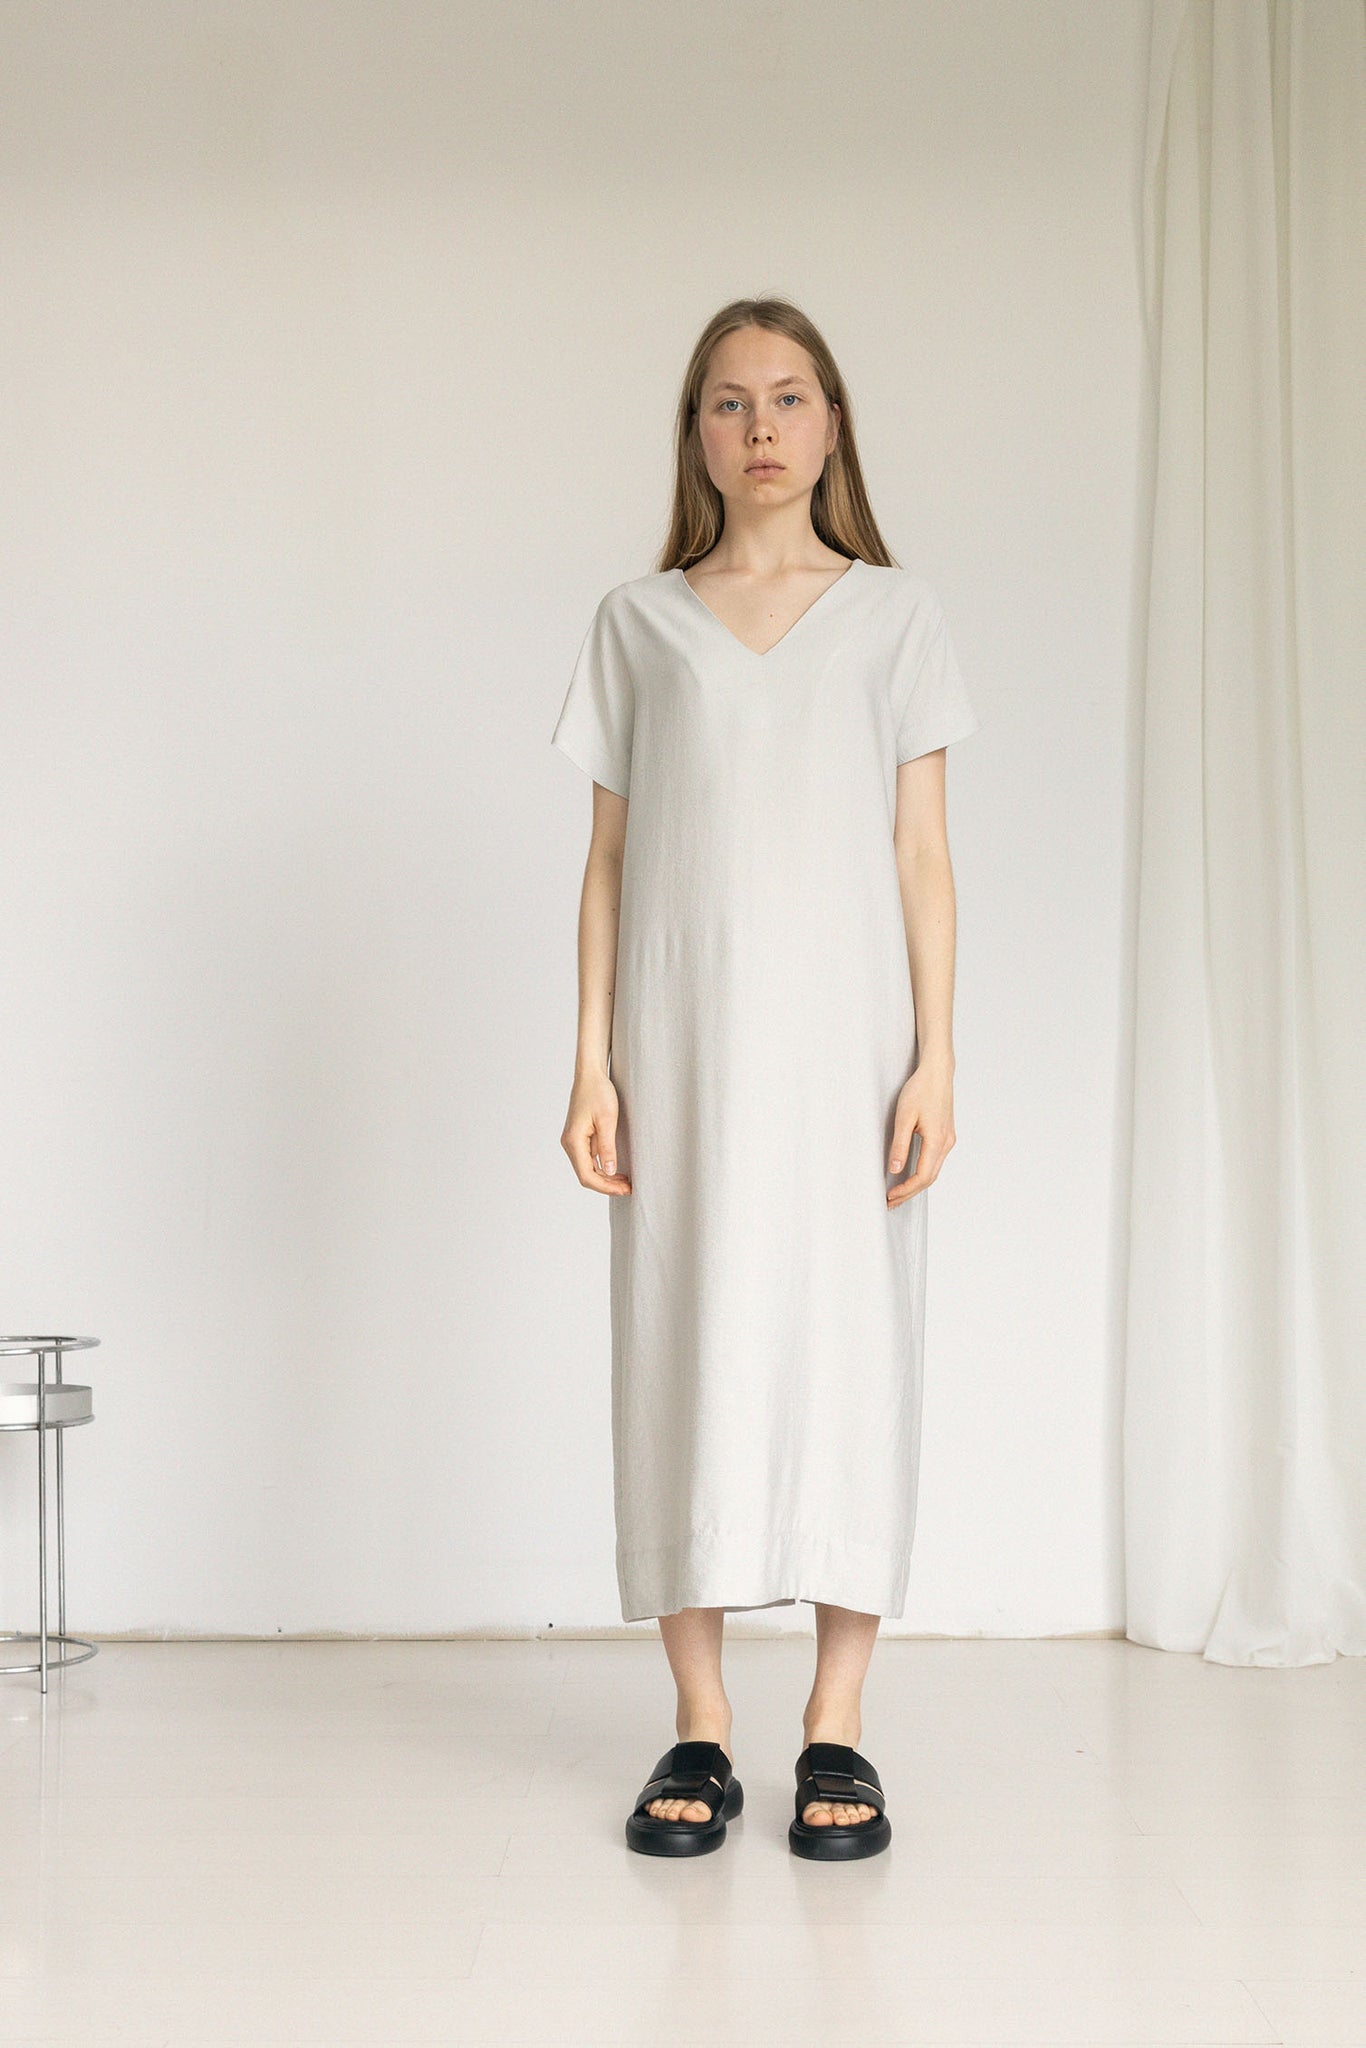 L.985 - EFFORTLESS DRESS - Light Grey